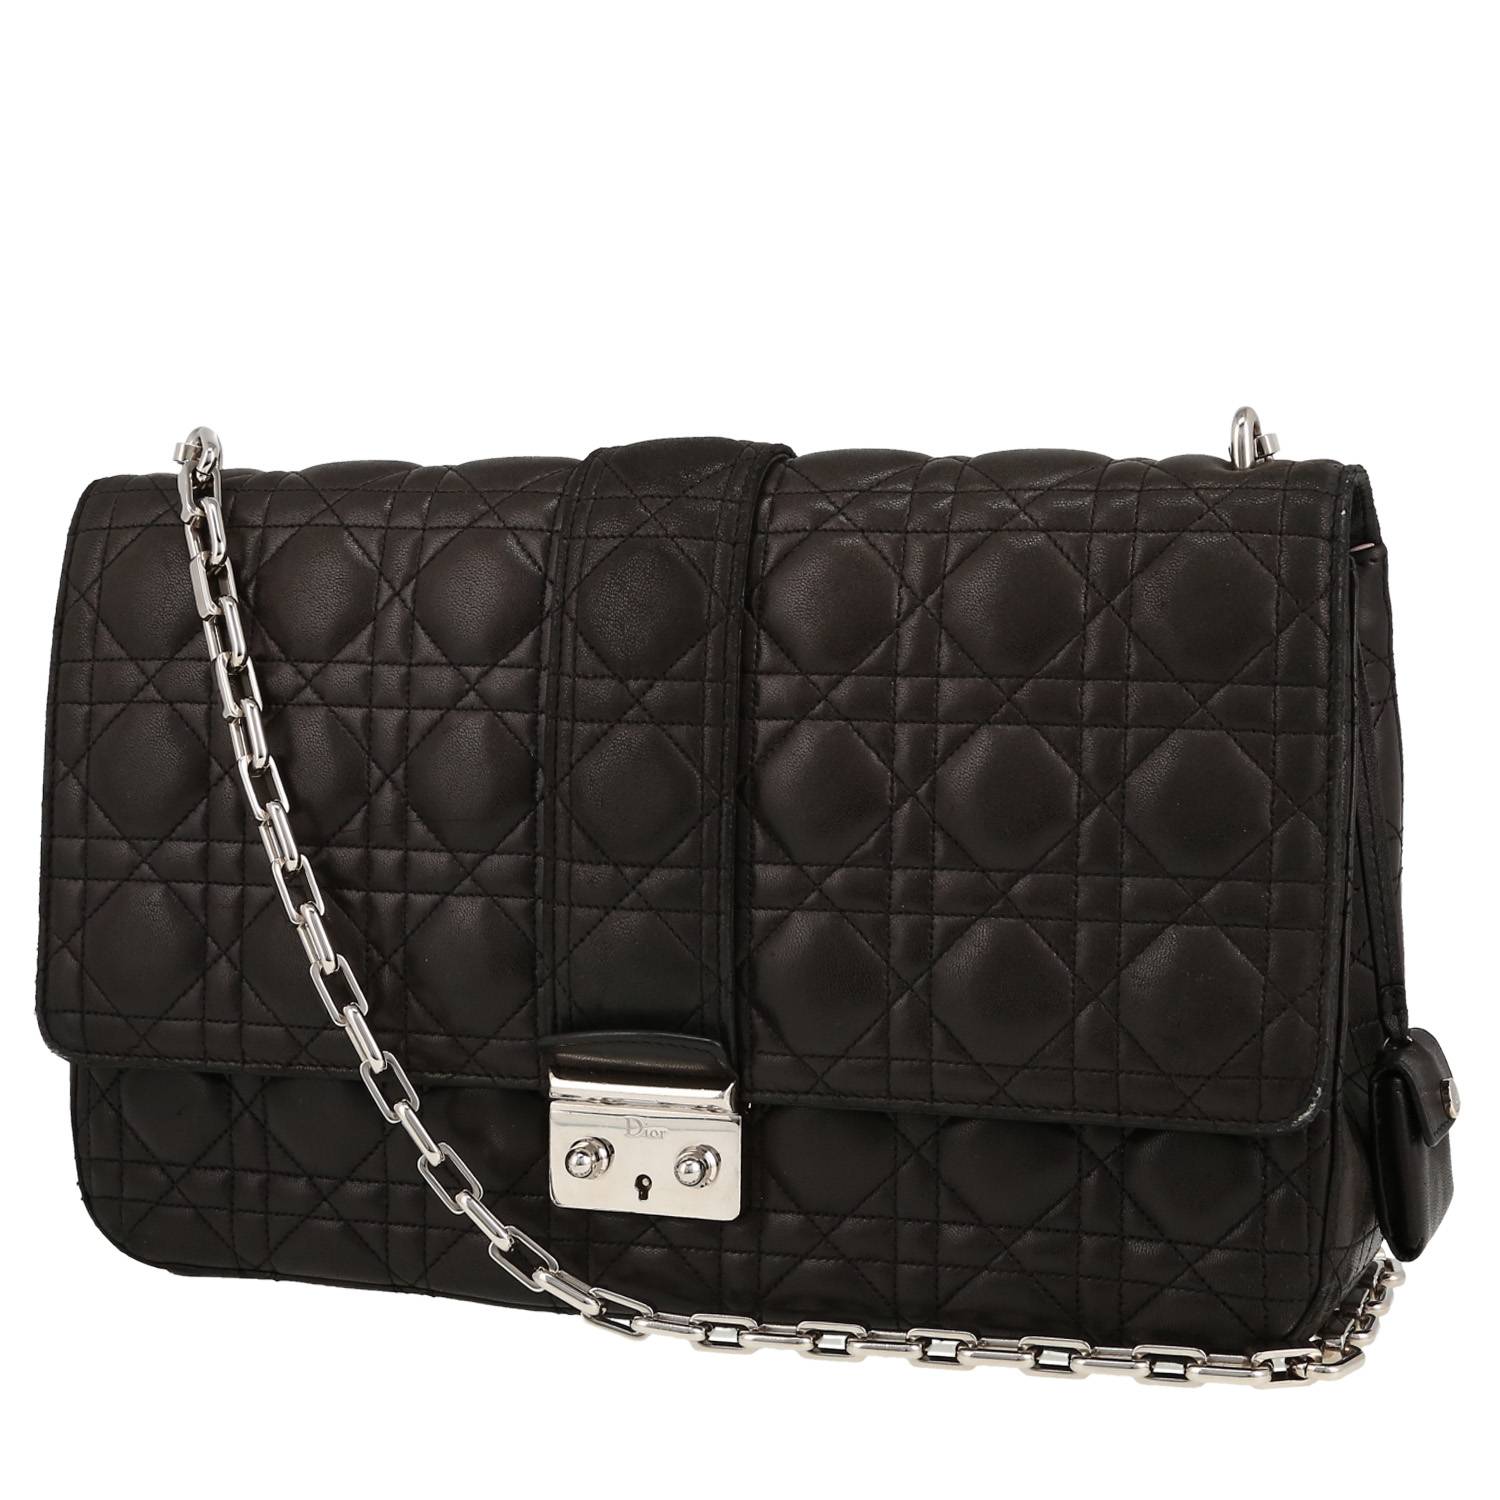 Miss Promenade Handbag In Black Leather Cannage